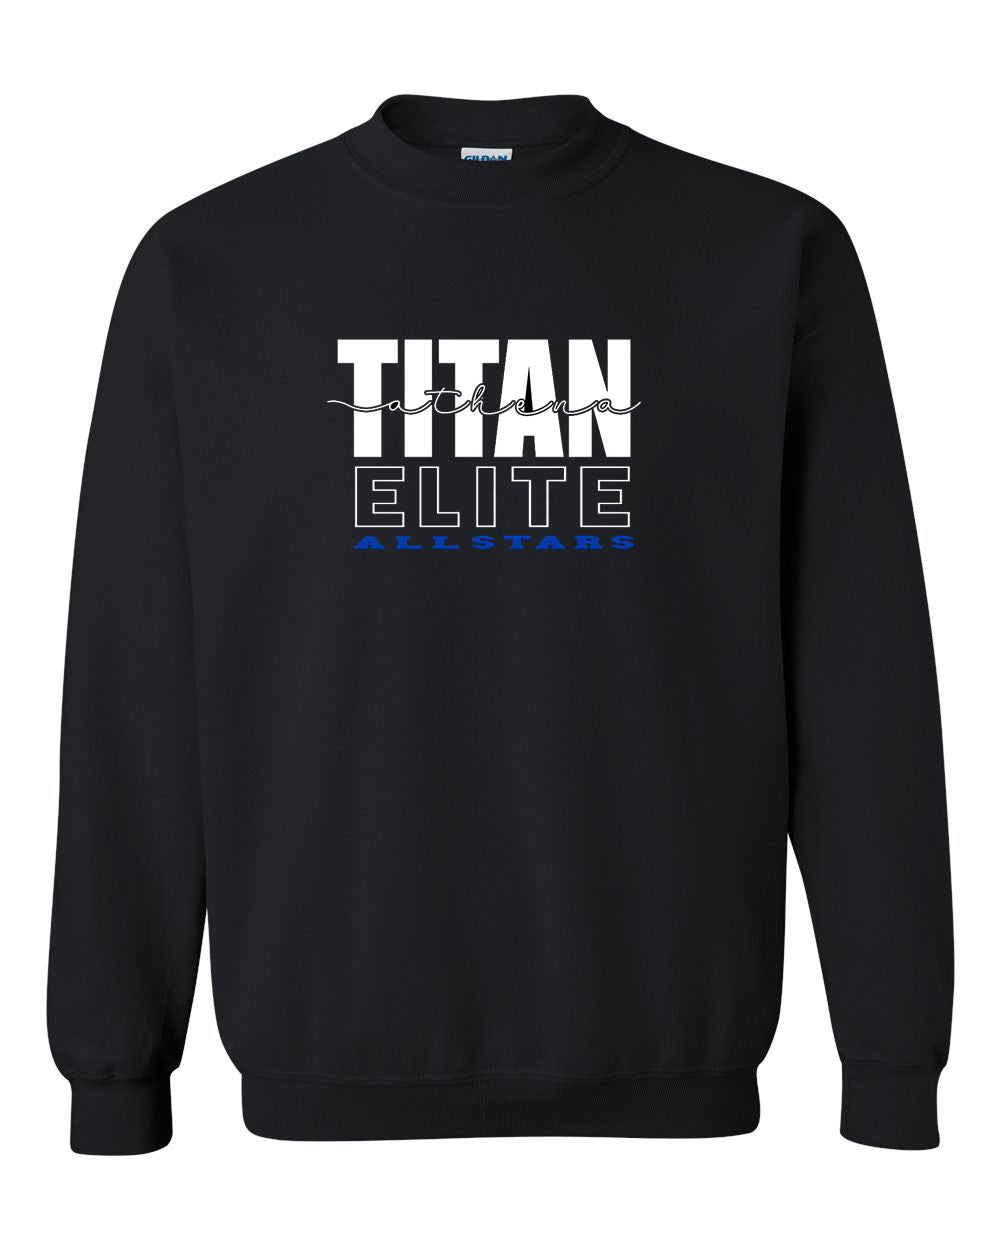 Titan Elite Team non hooded sweatshirt